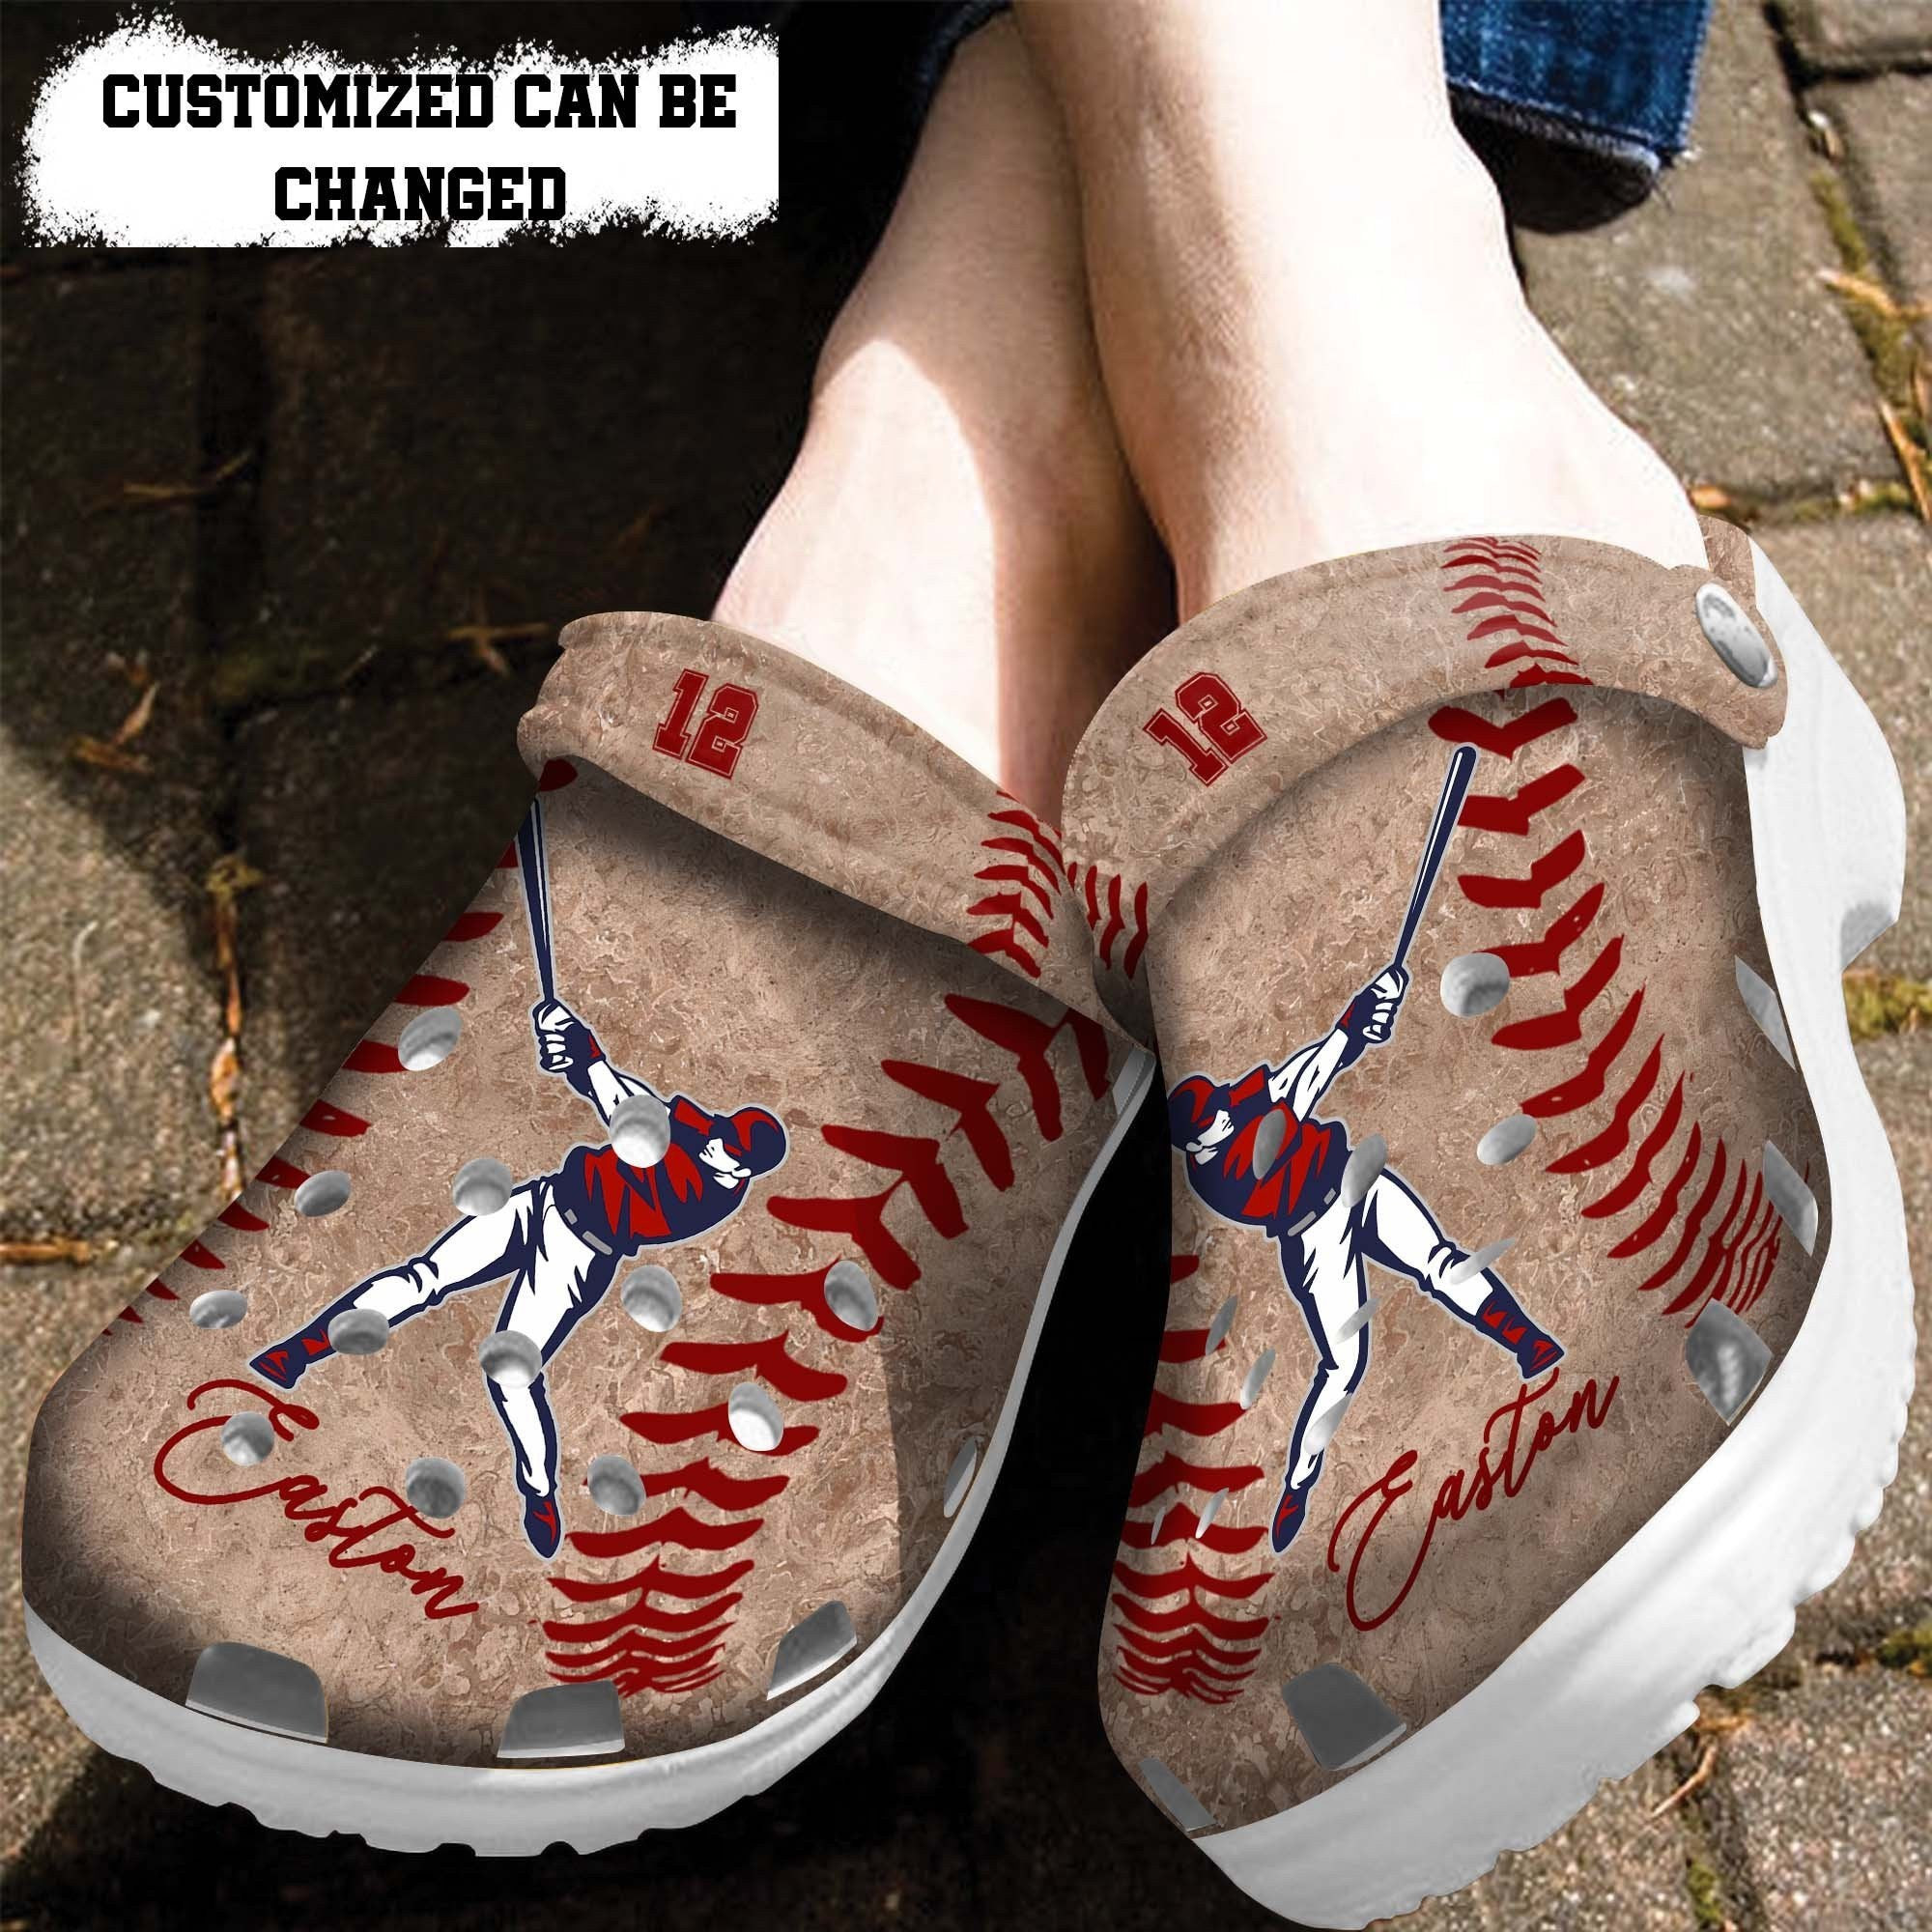 Baseball Leather Crocs Shoes Gift Men Women- Baseball Shoes Croc Clogs Customize